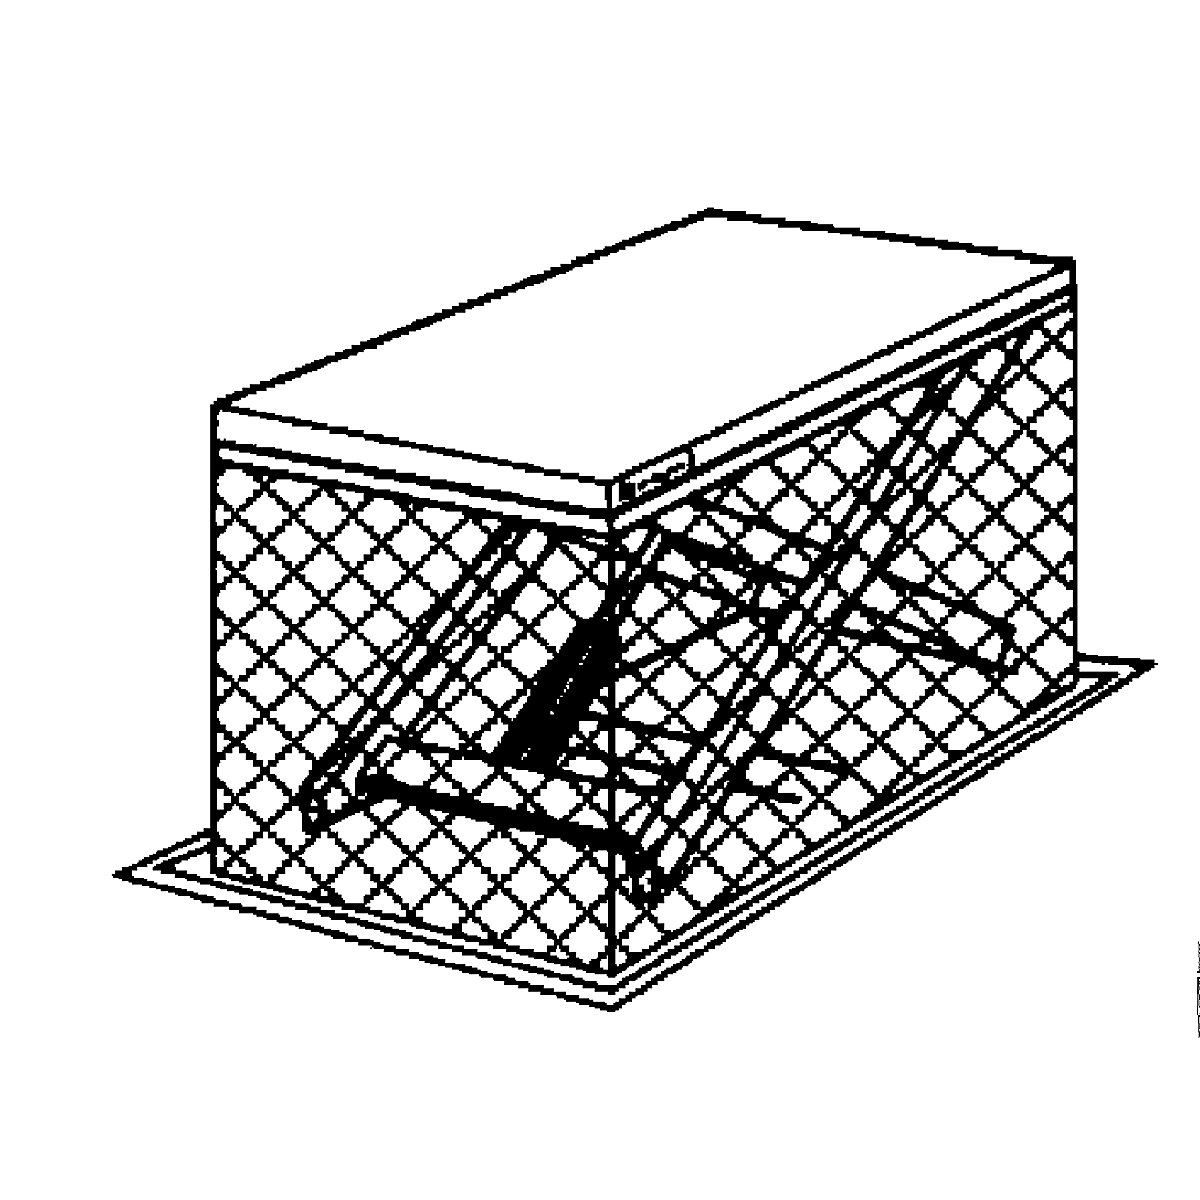 Compact lift table – Edmolift (Product illustration 11)-10